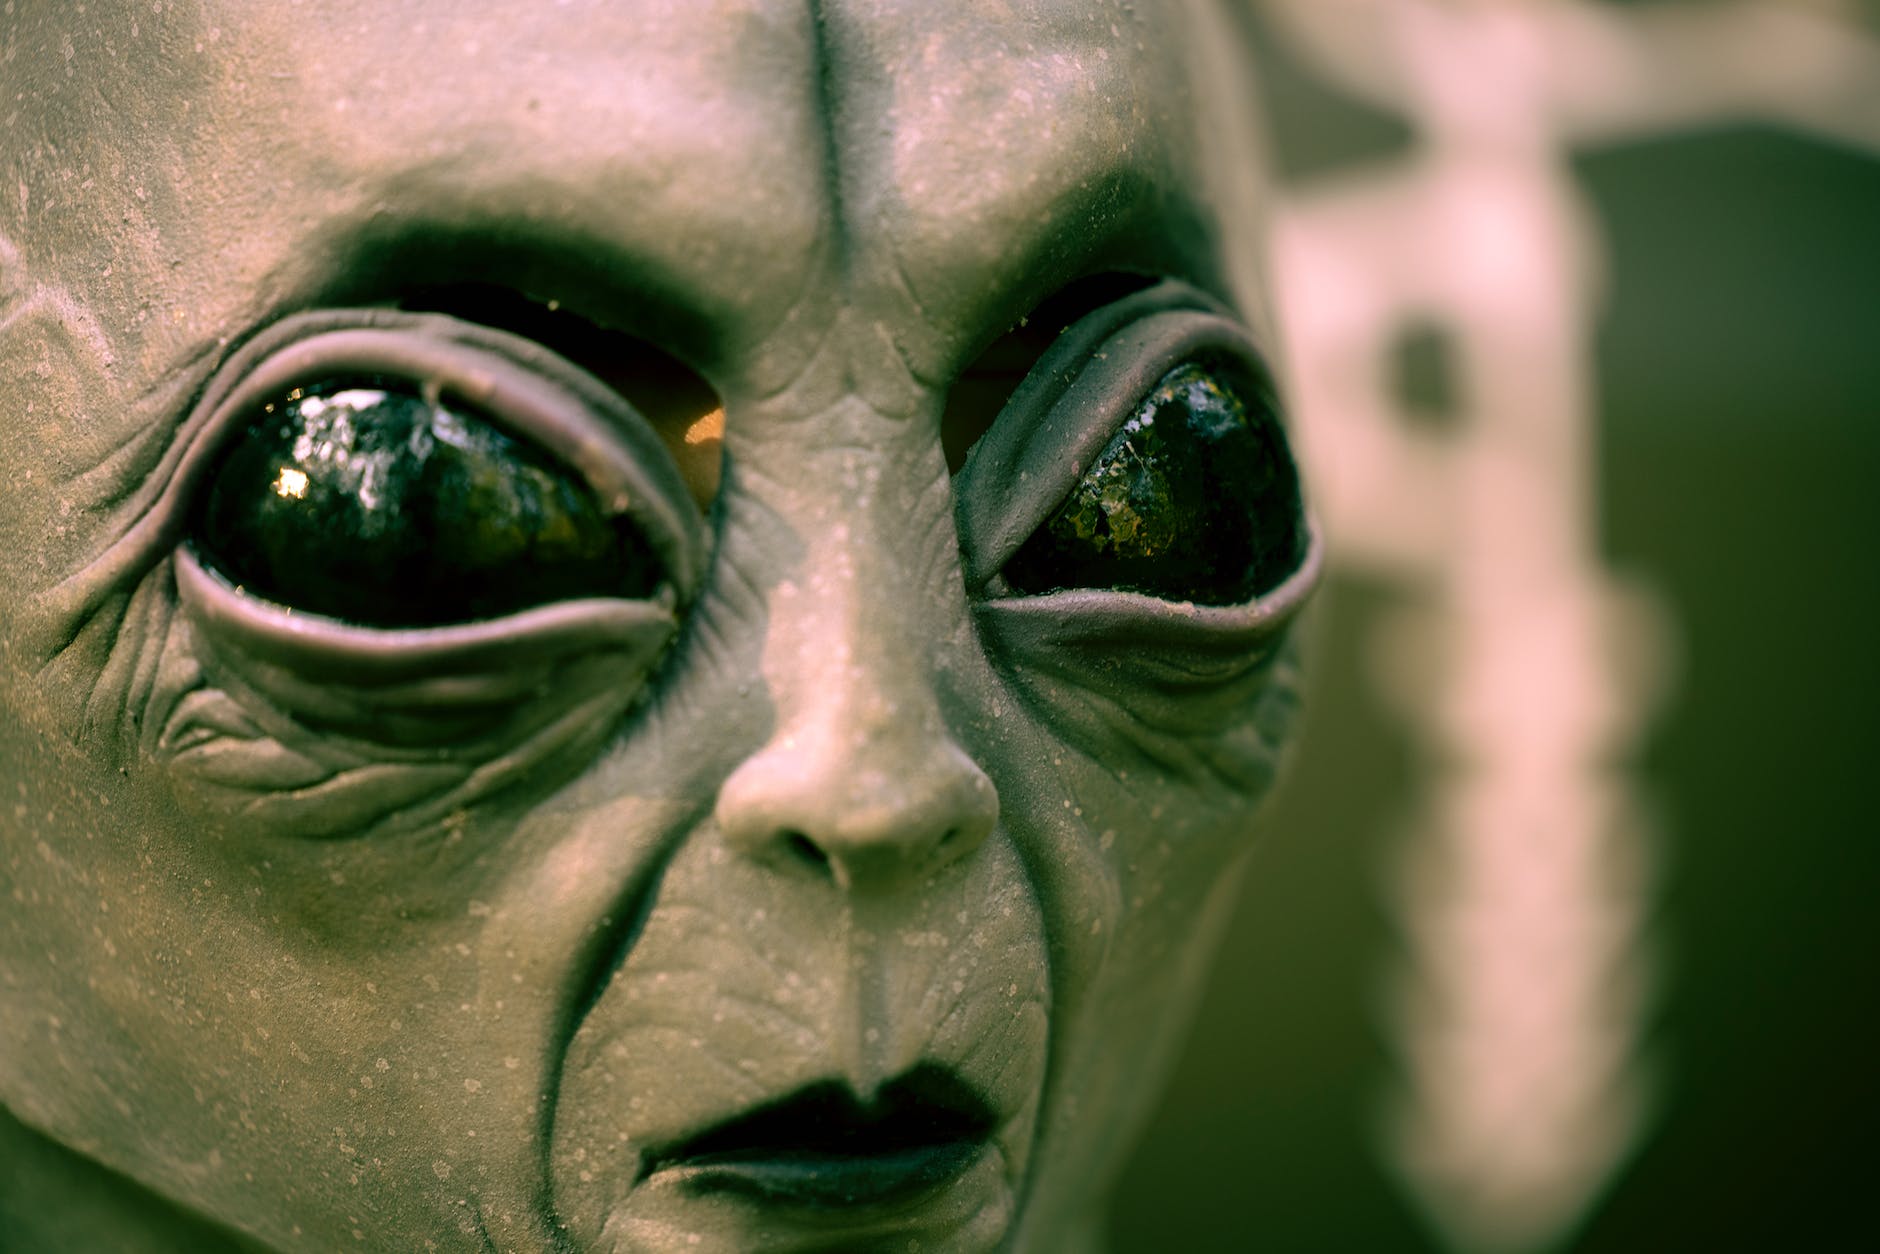 gray alien mask with big black eyes